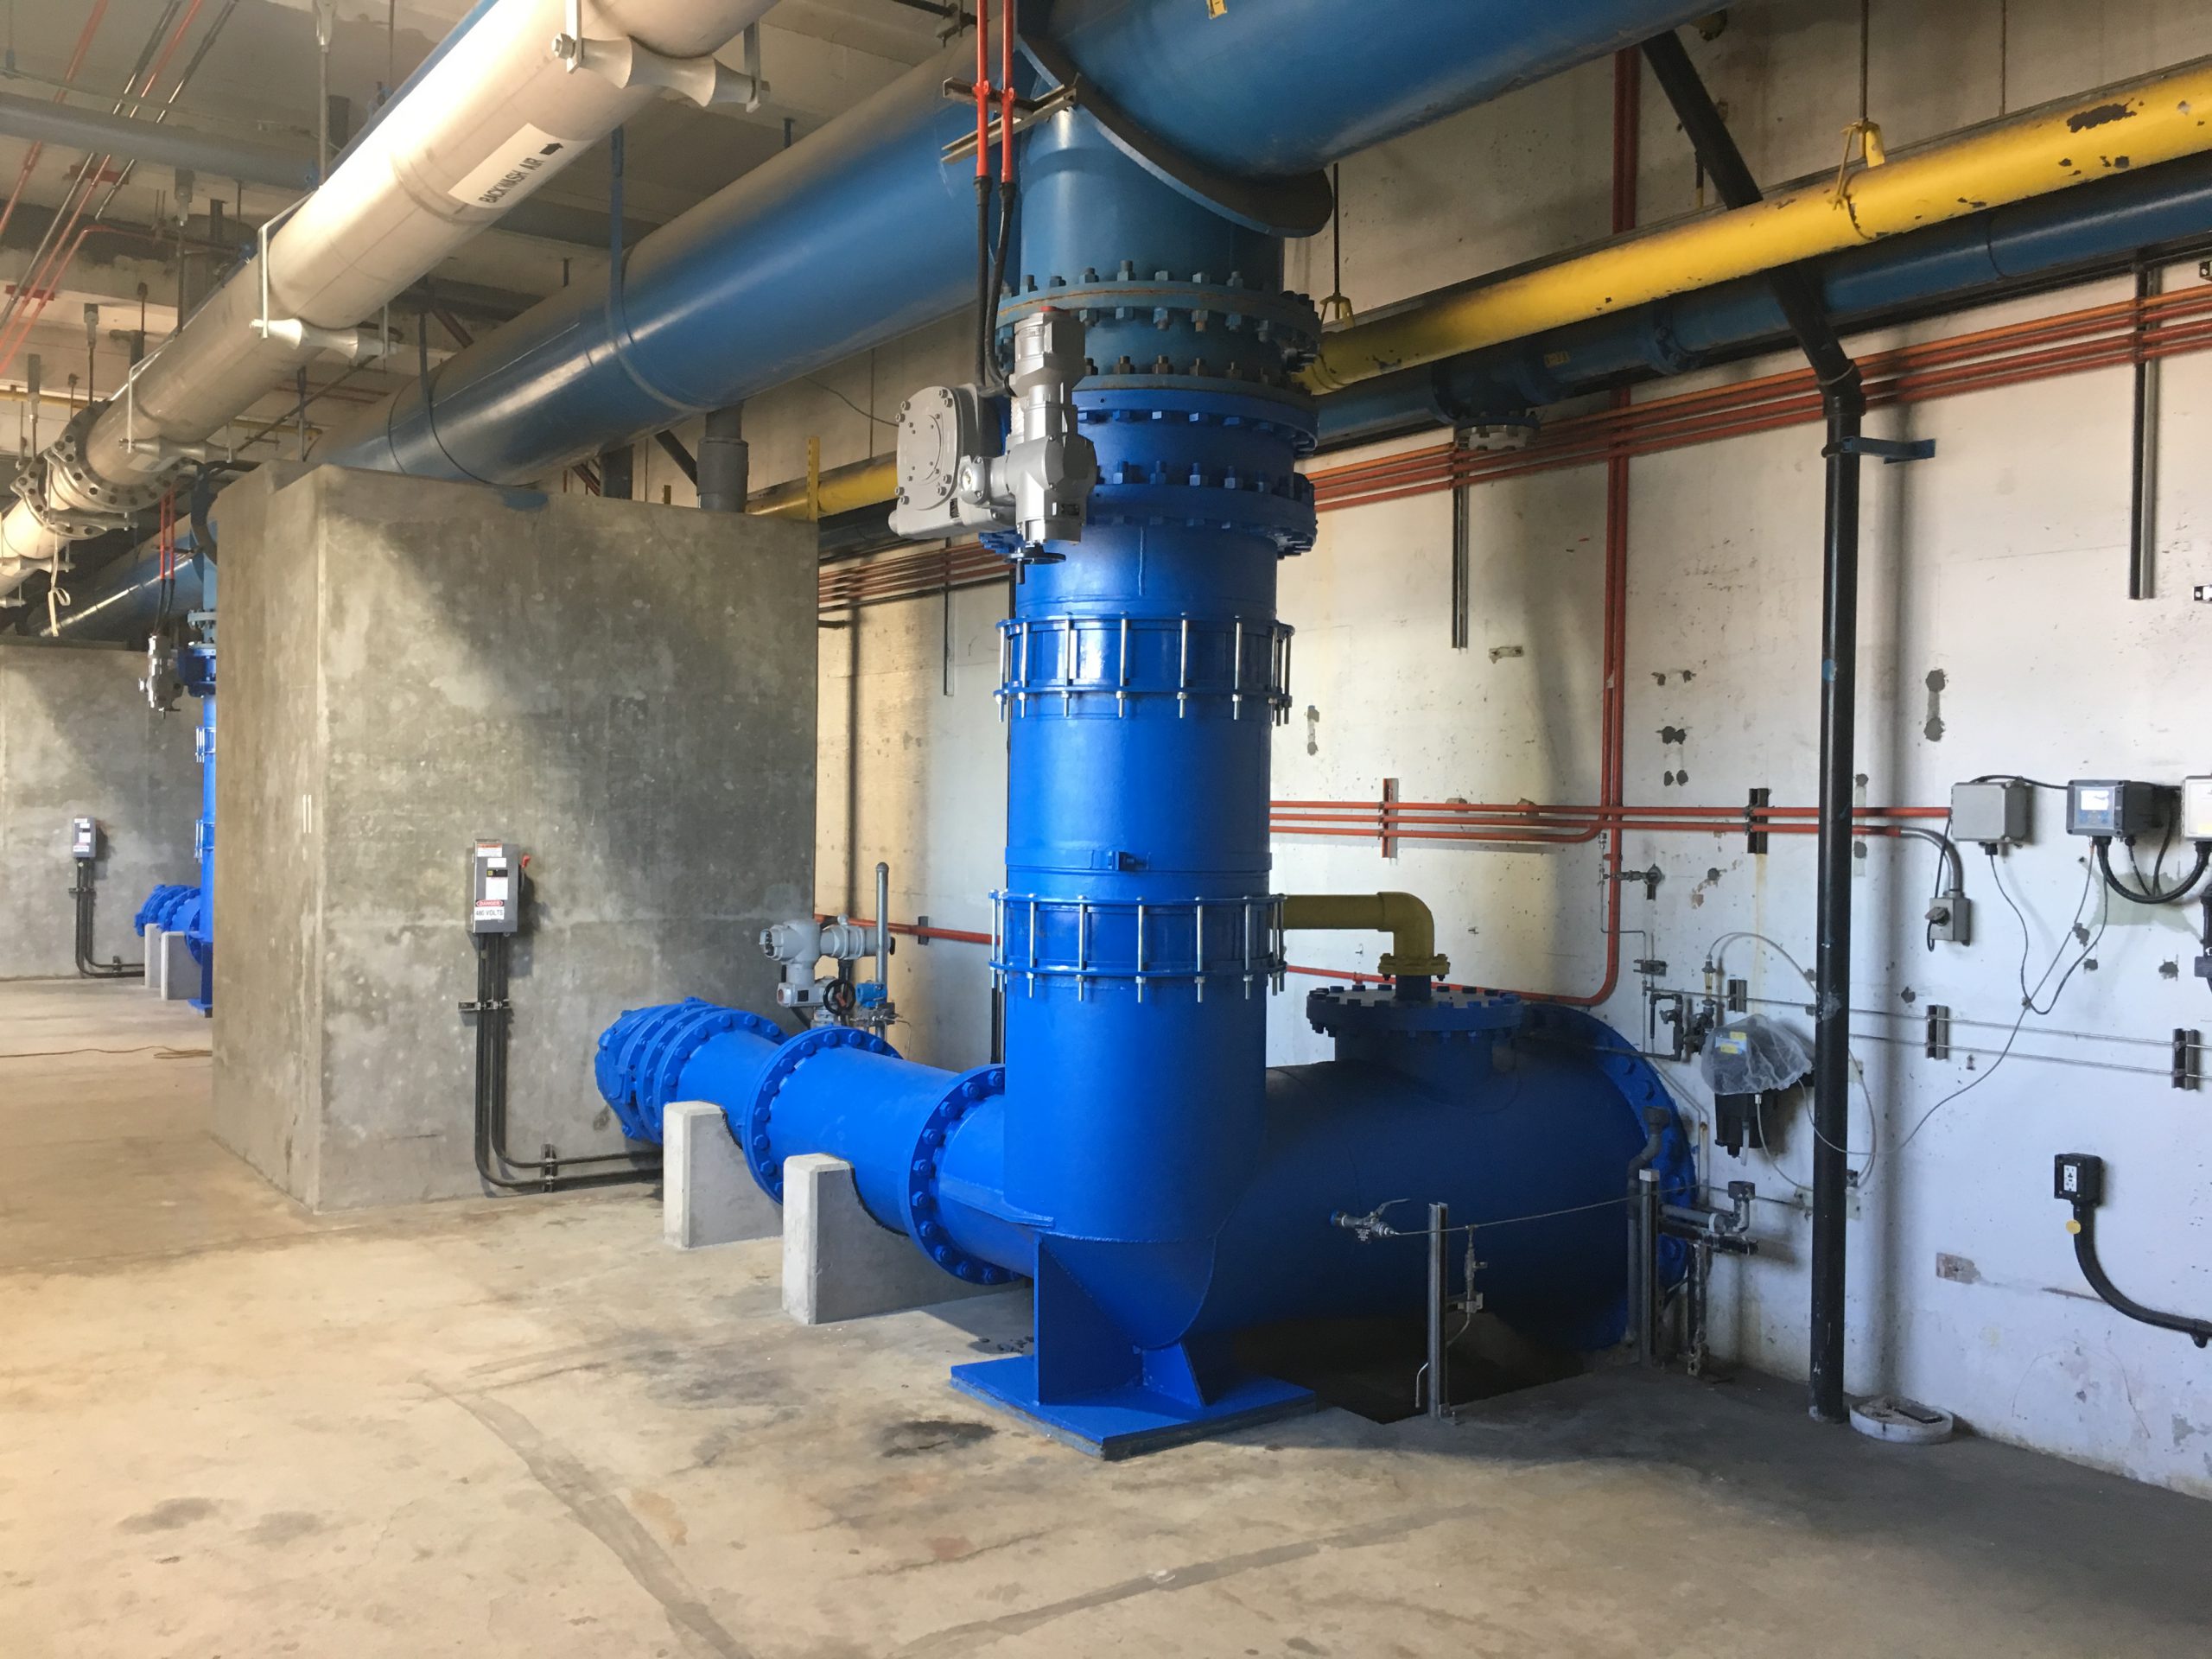 24th Street Water Treatment Plant Rehabilitation